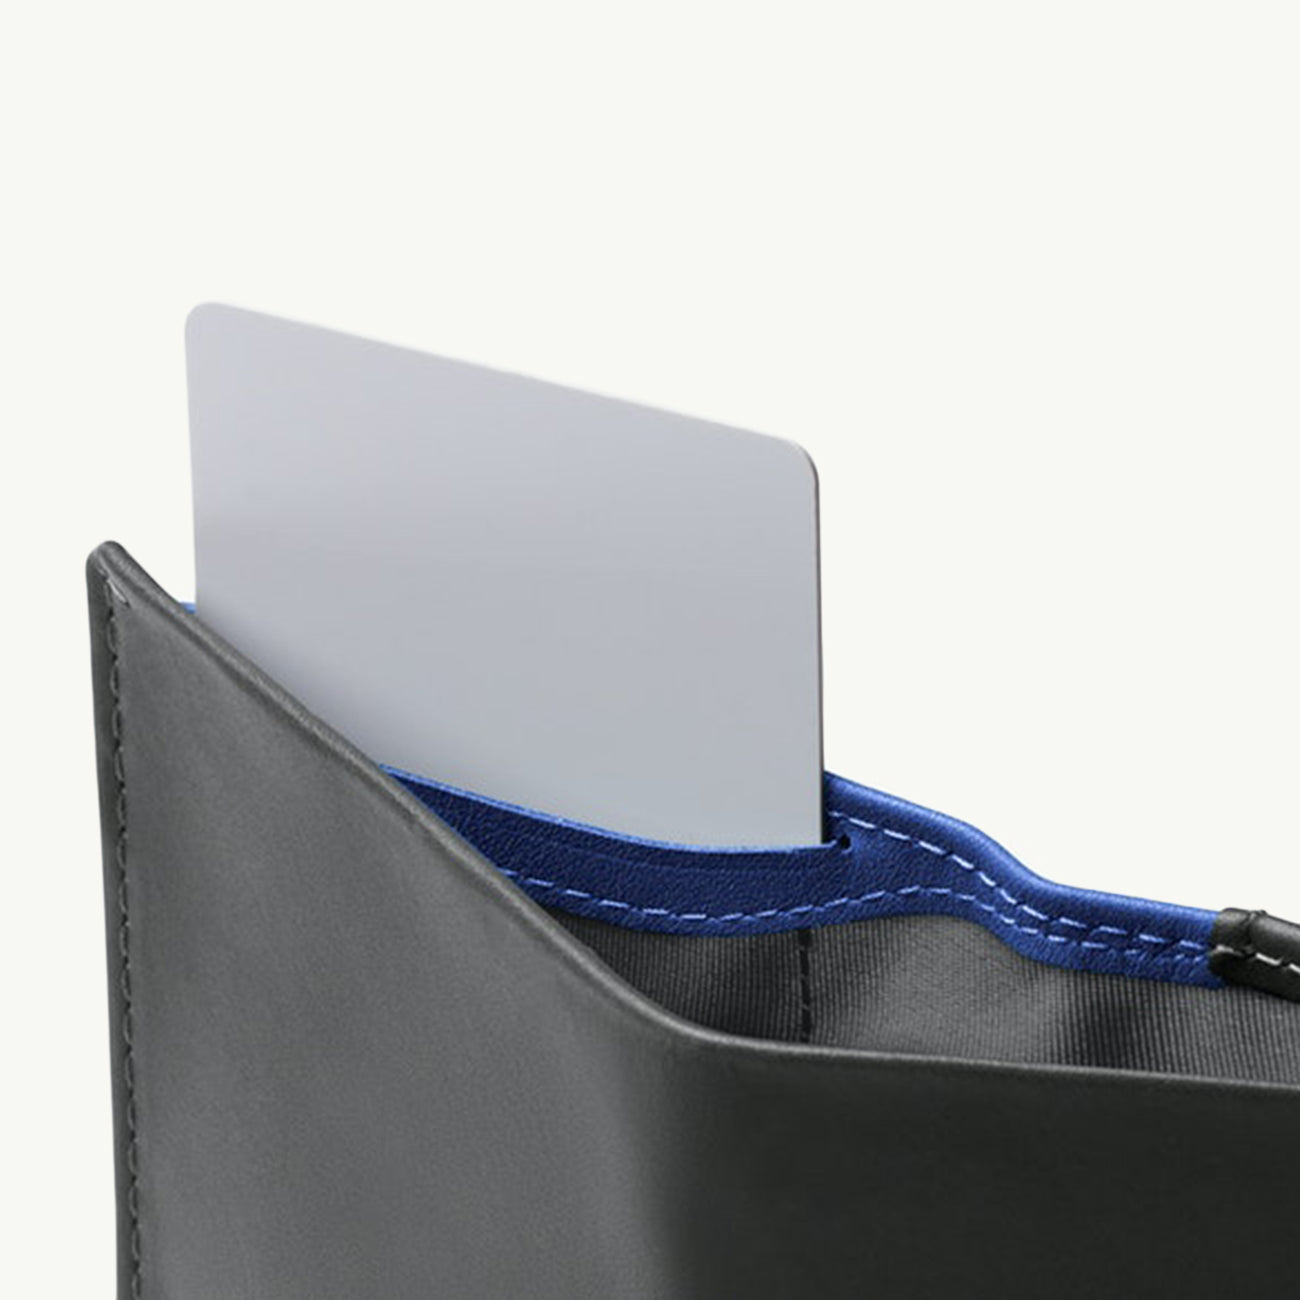 Note Sleeve Wallet - Charcoal/Cobalt